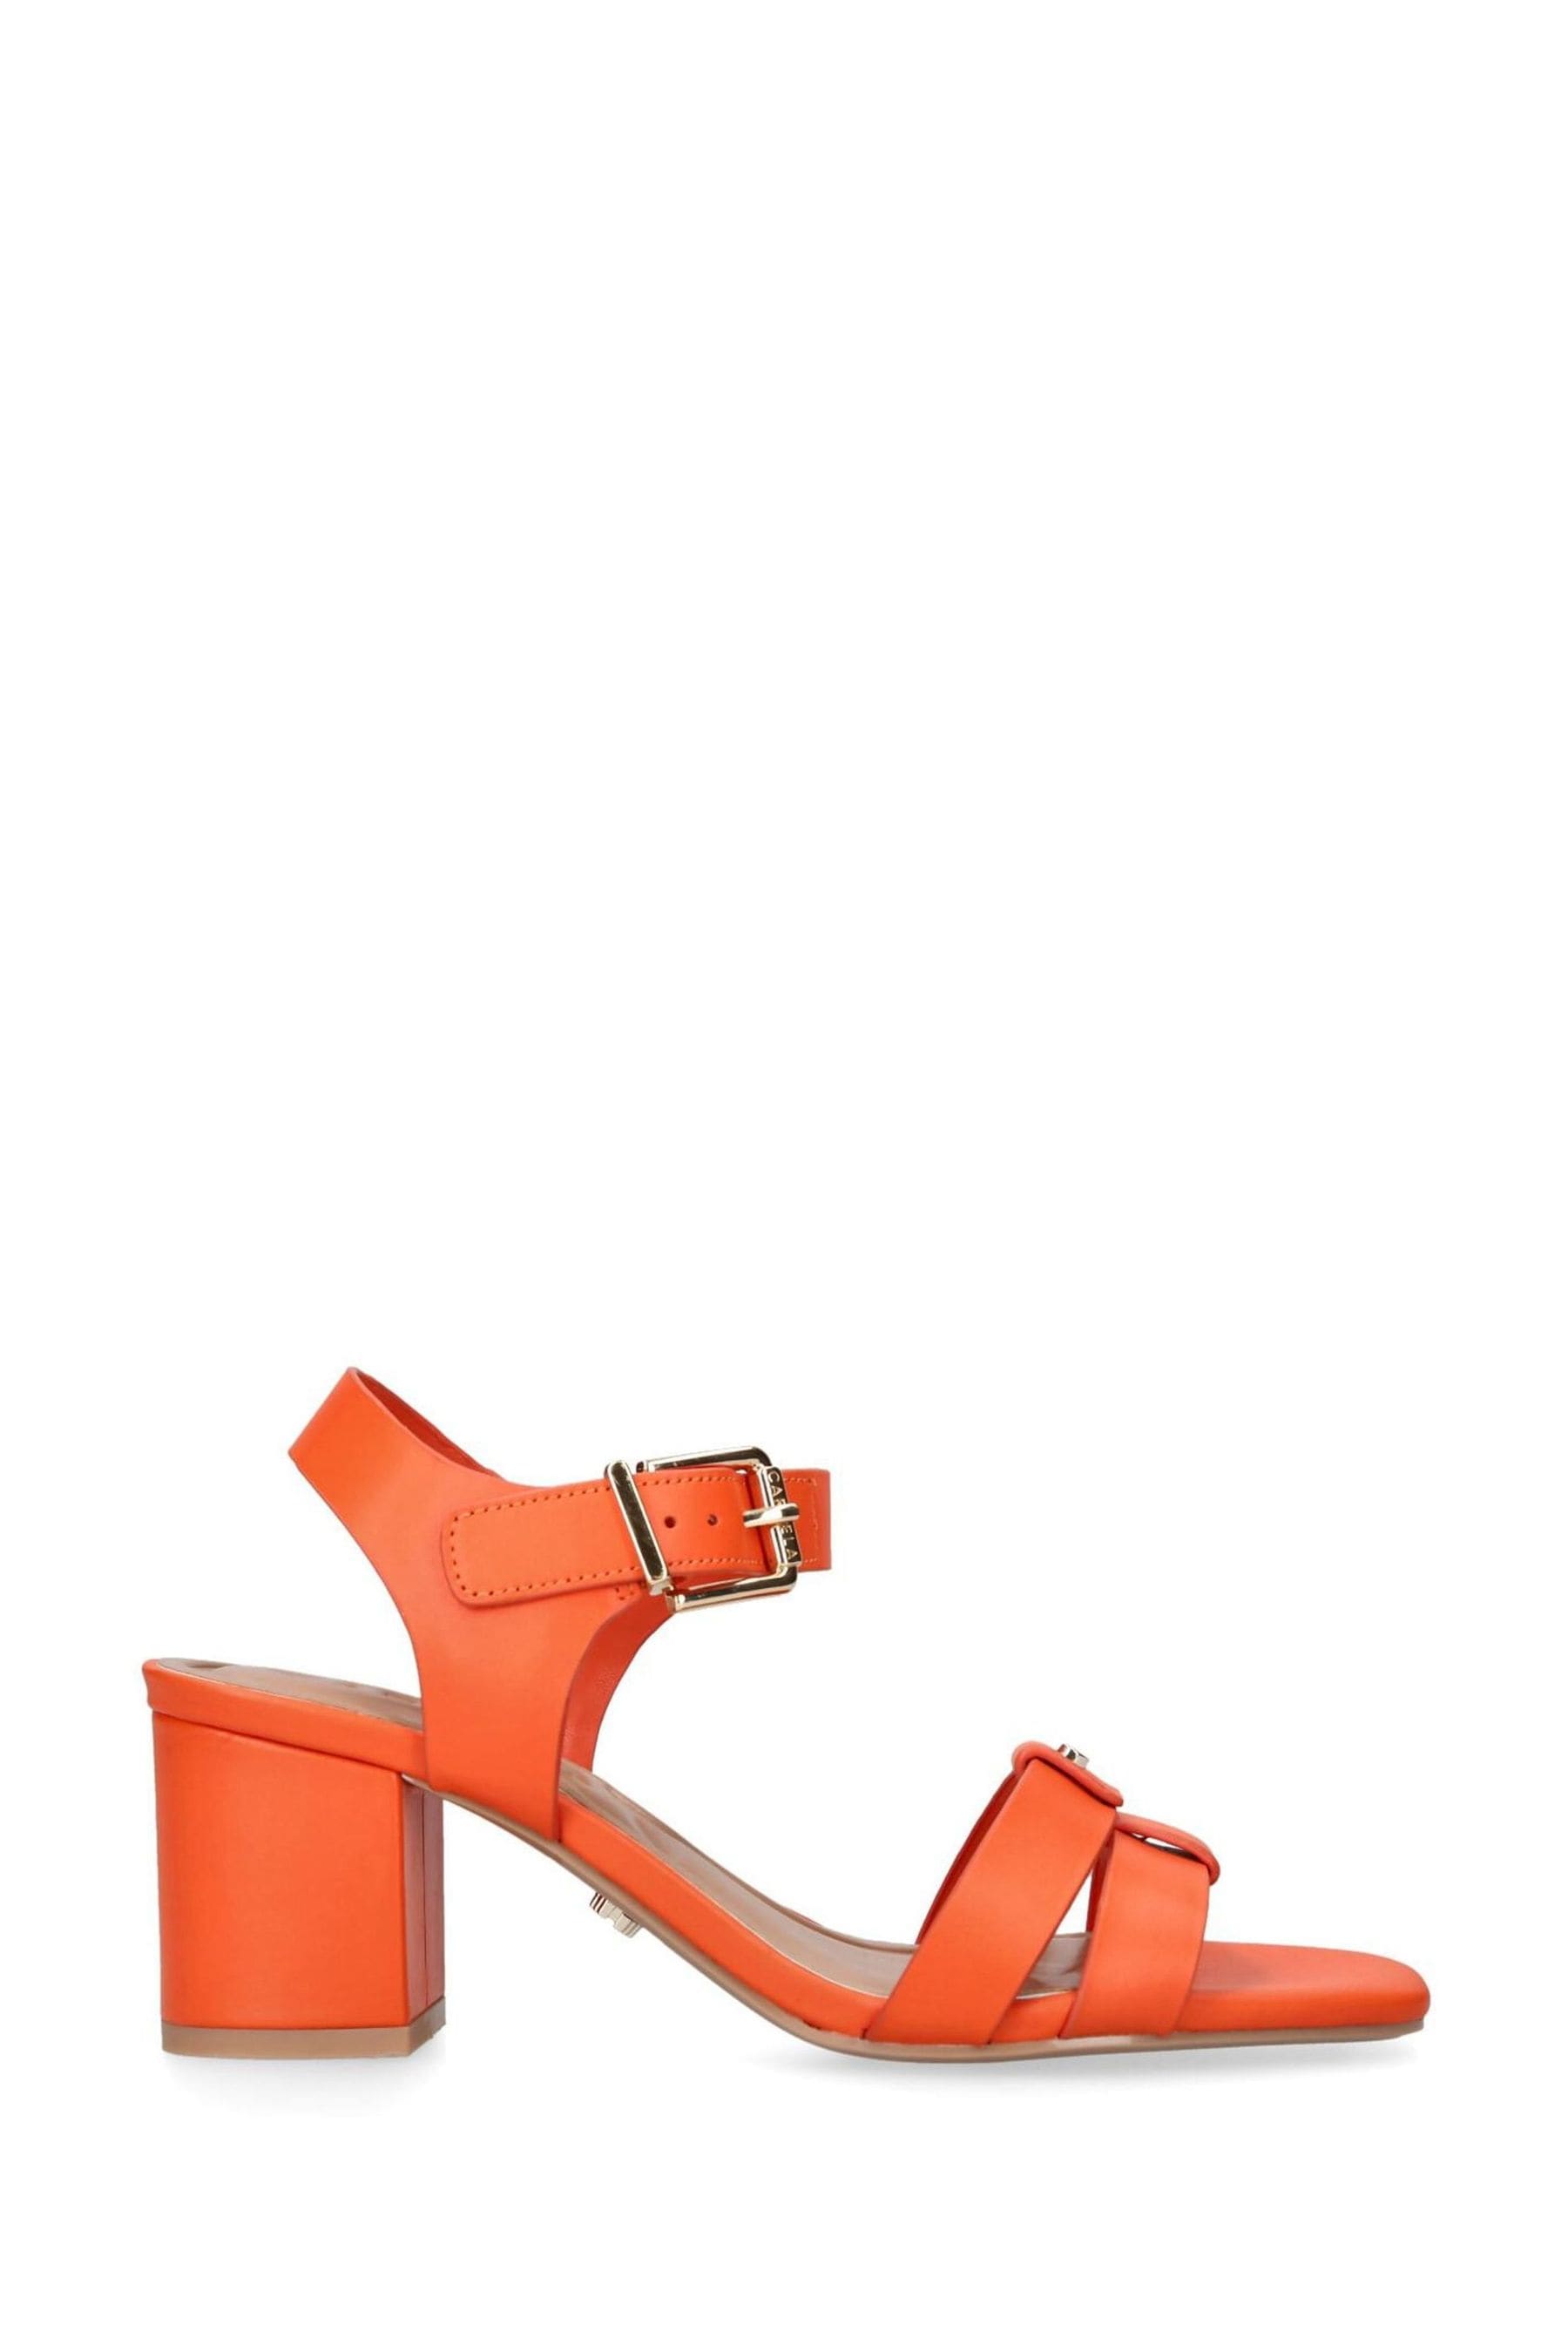 Buy Carvela Orange City Break Mule 80 Sandals from the Next UK online shop